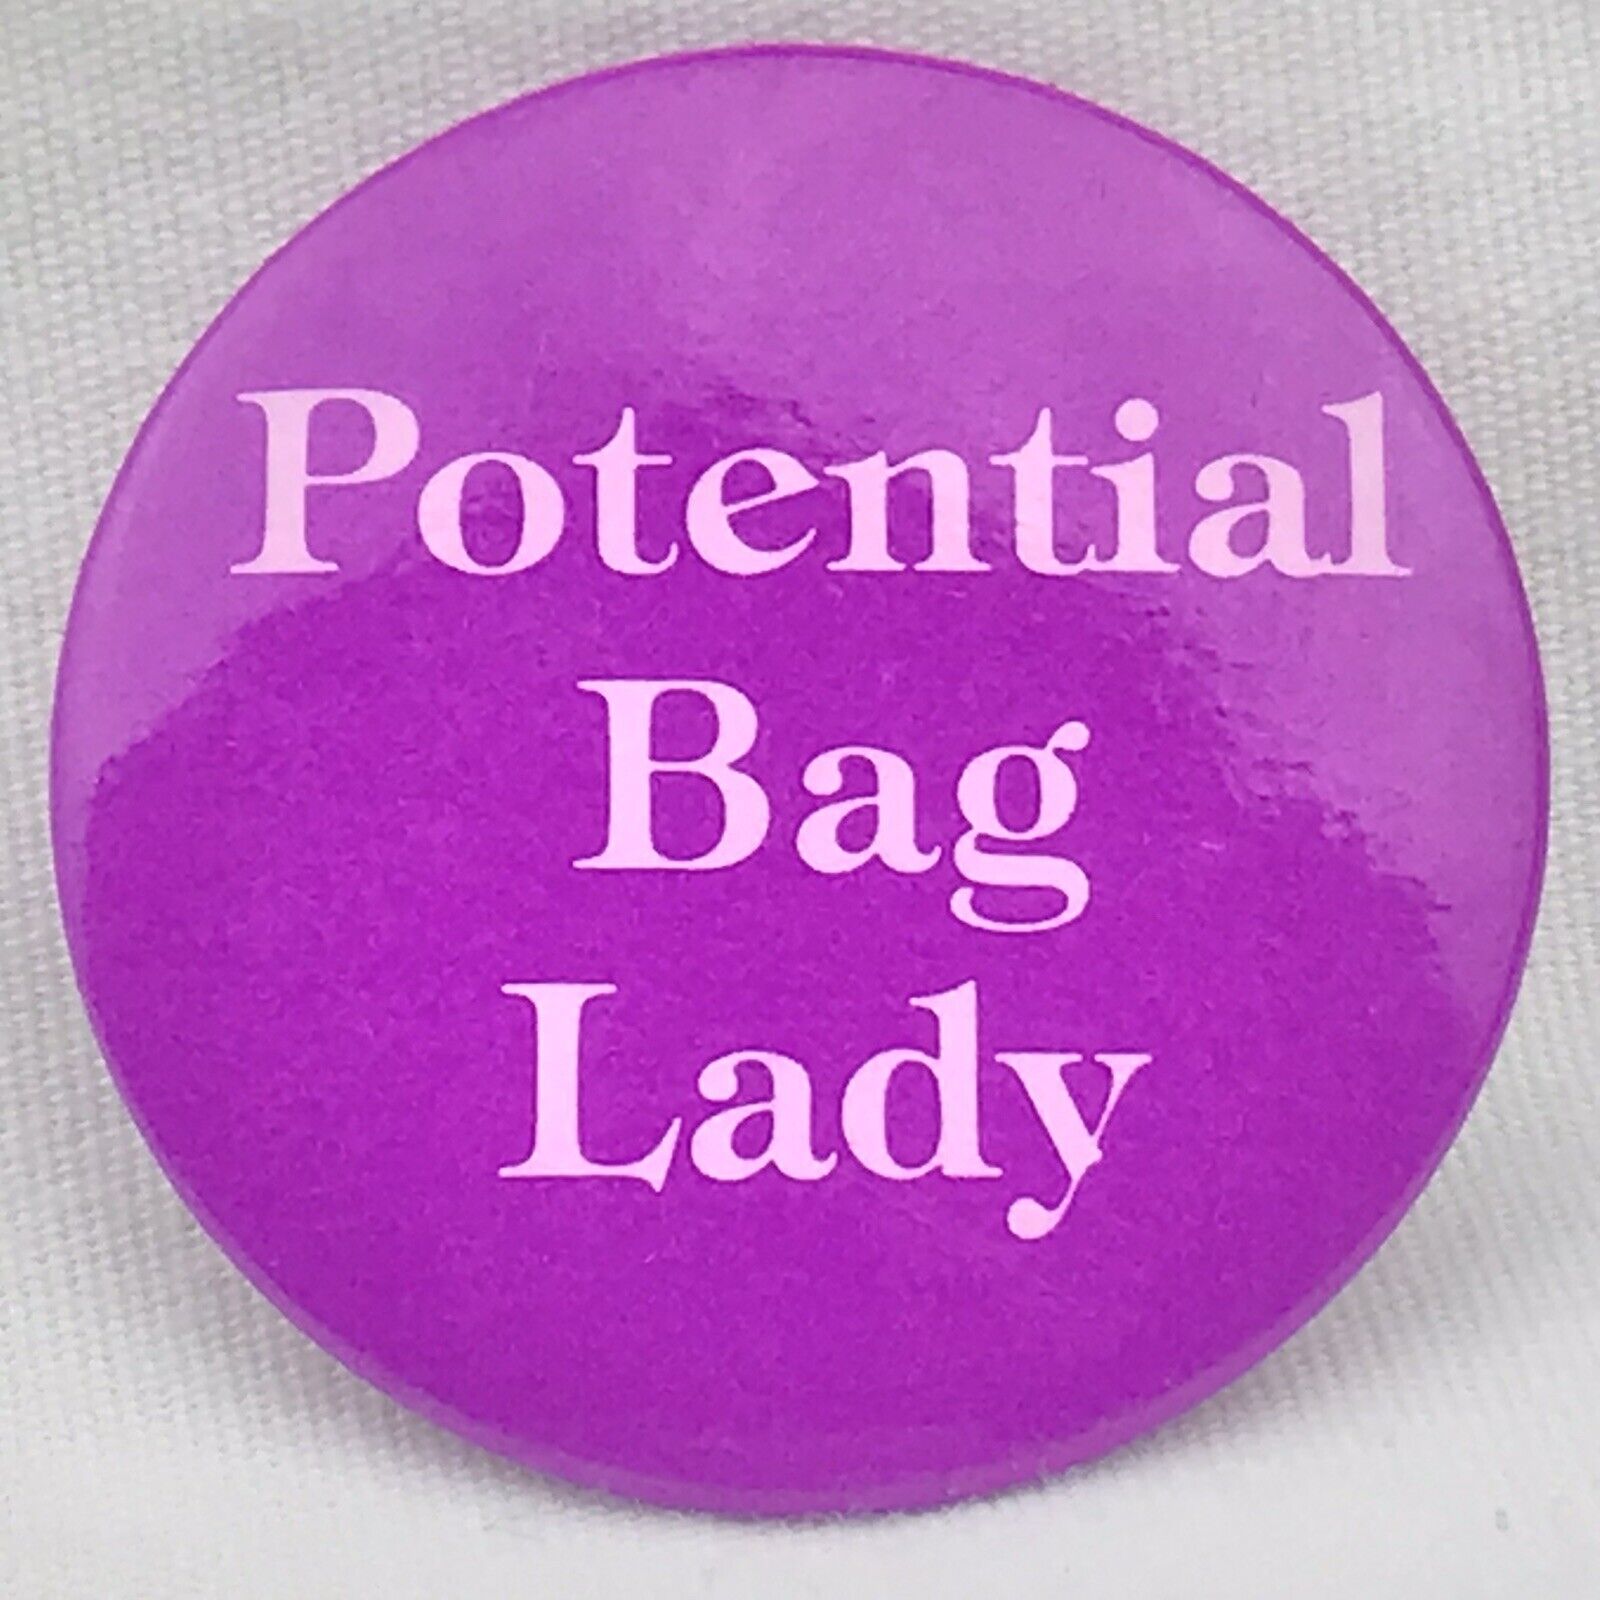 Potential Bag Lady  Vintage Pin Button Pinback